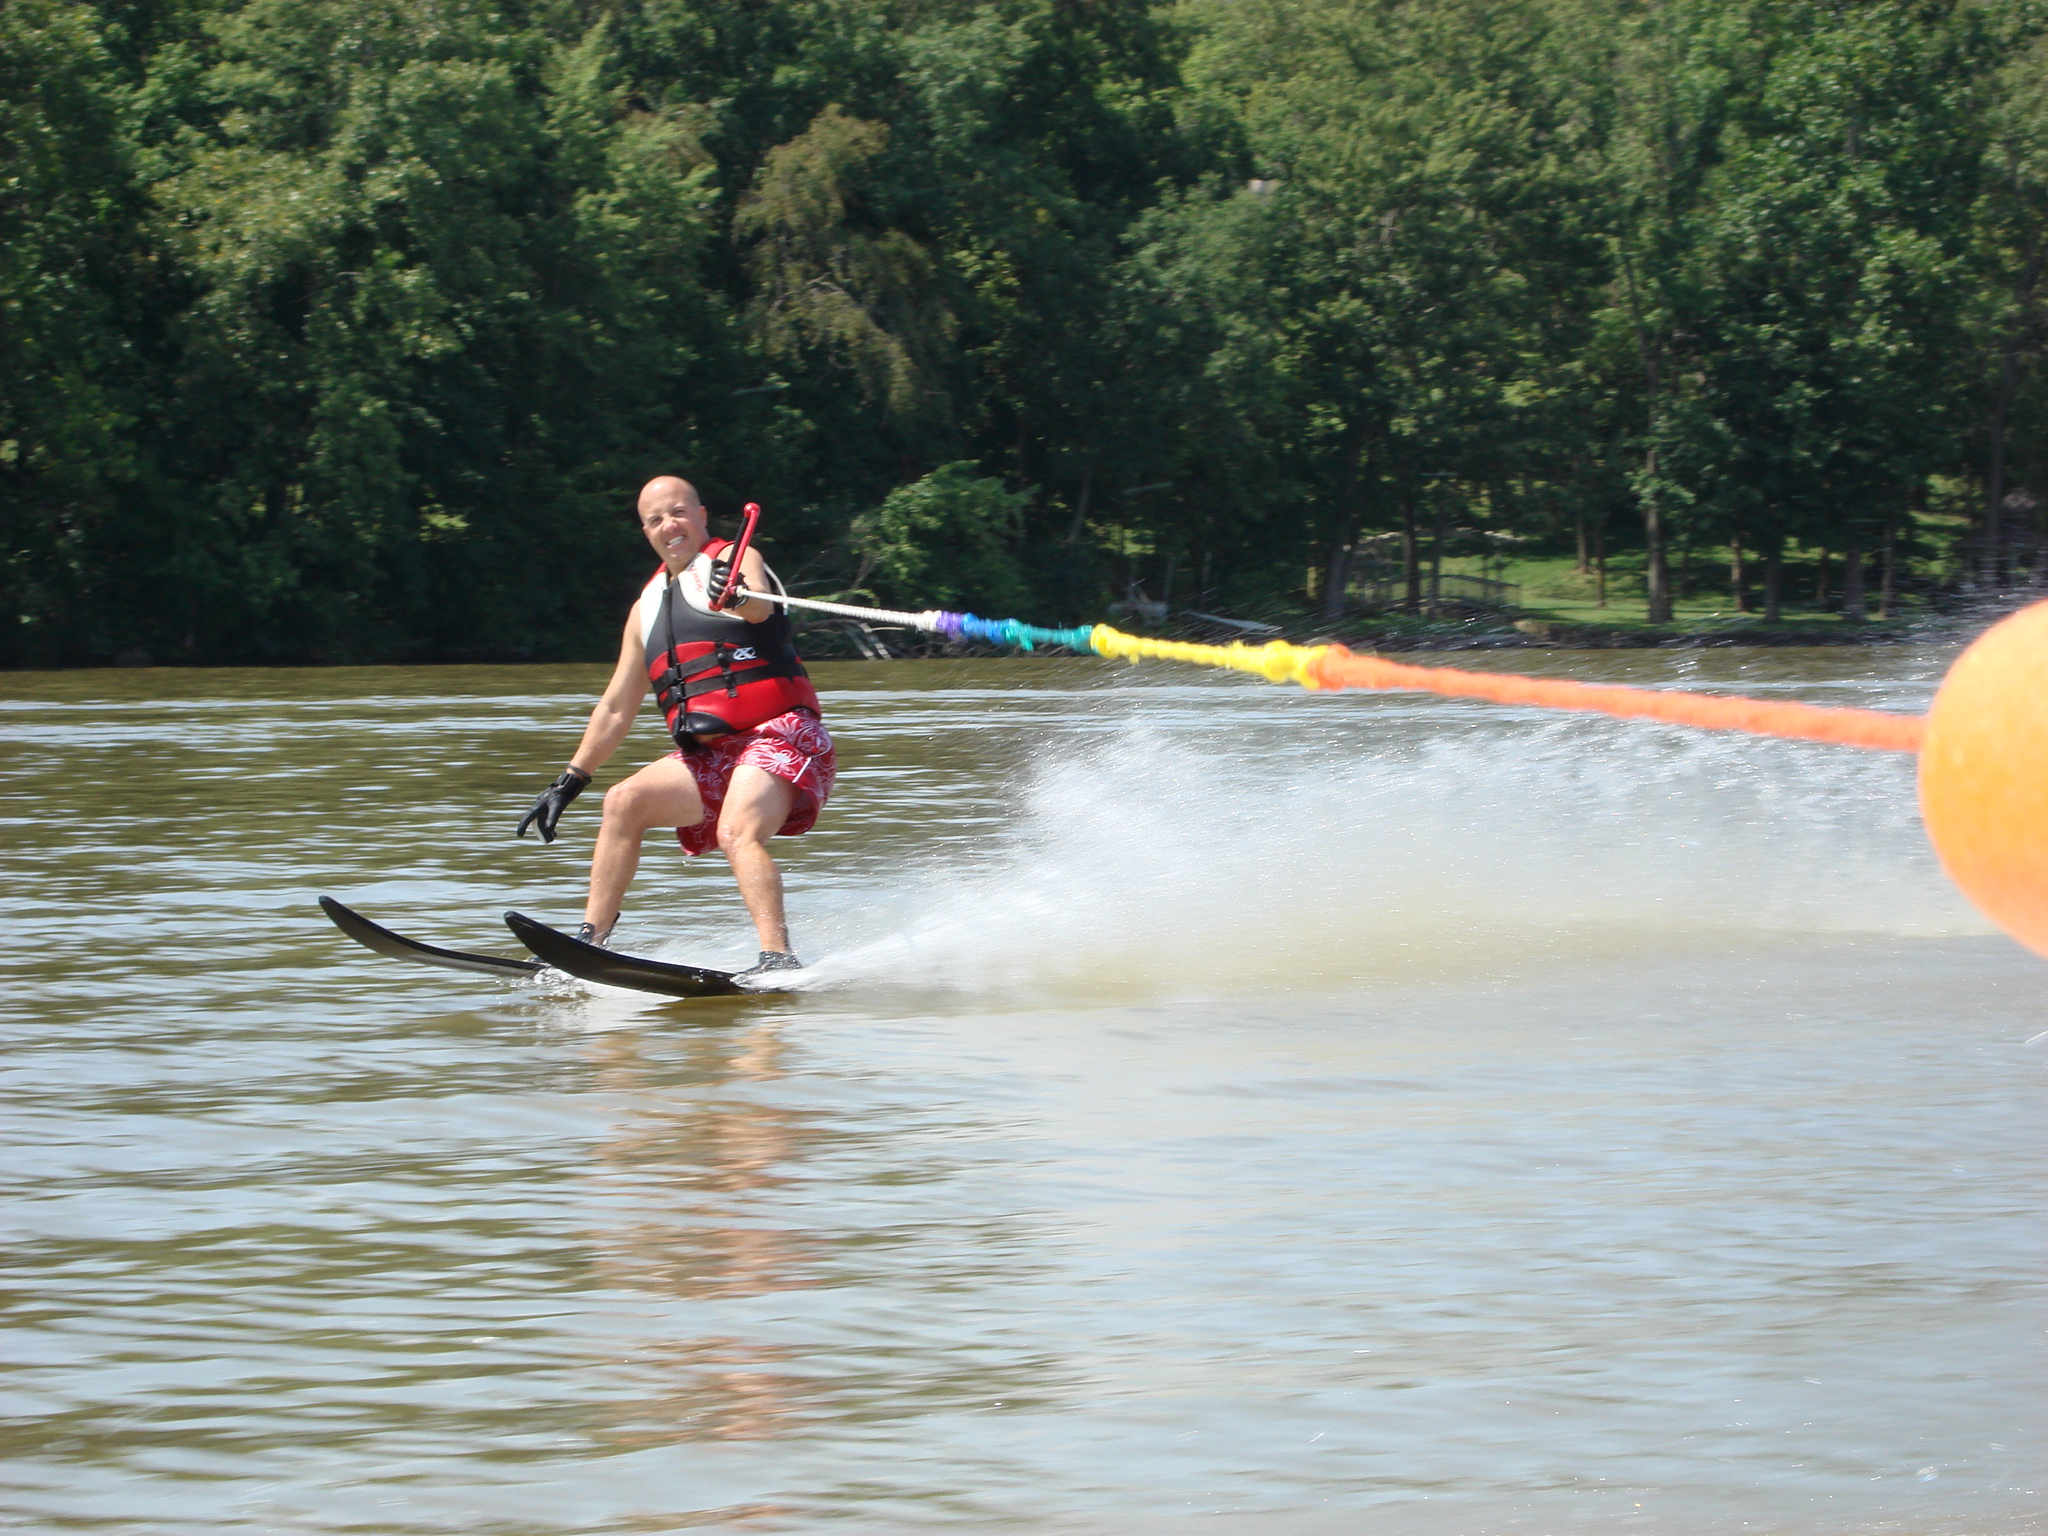 Athlete water skiing on water